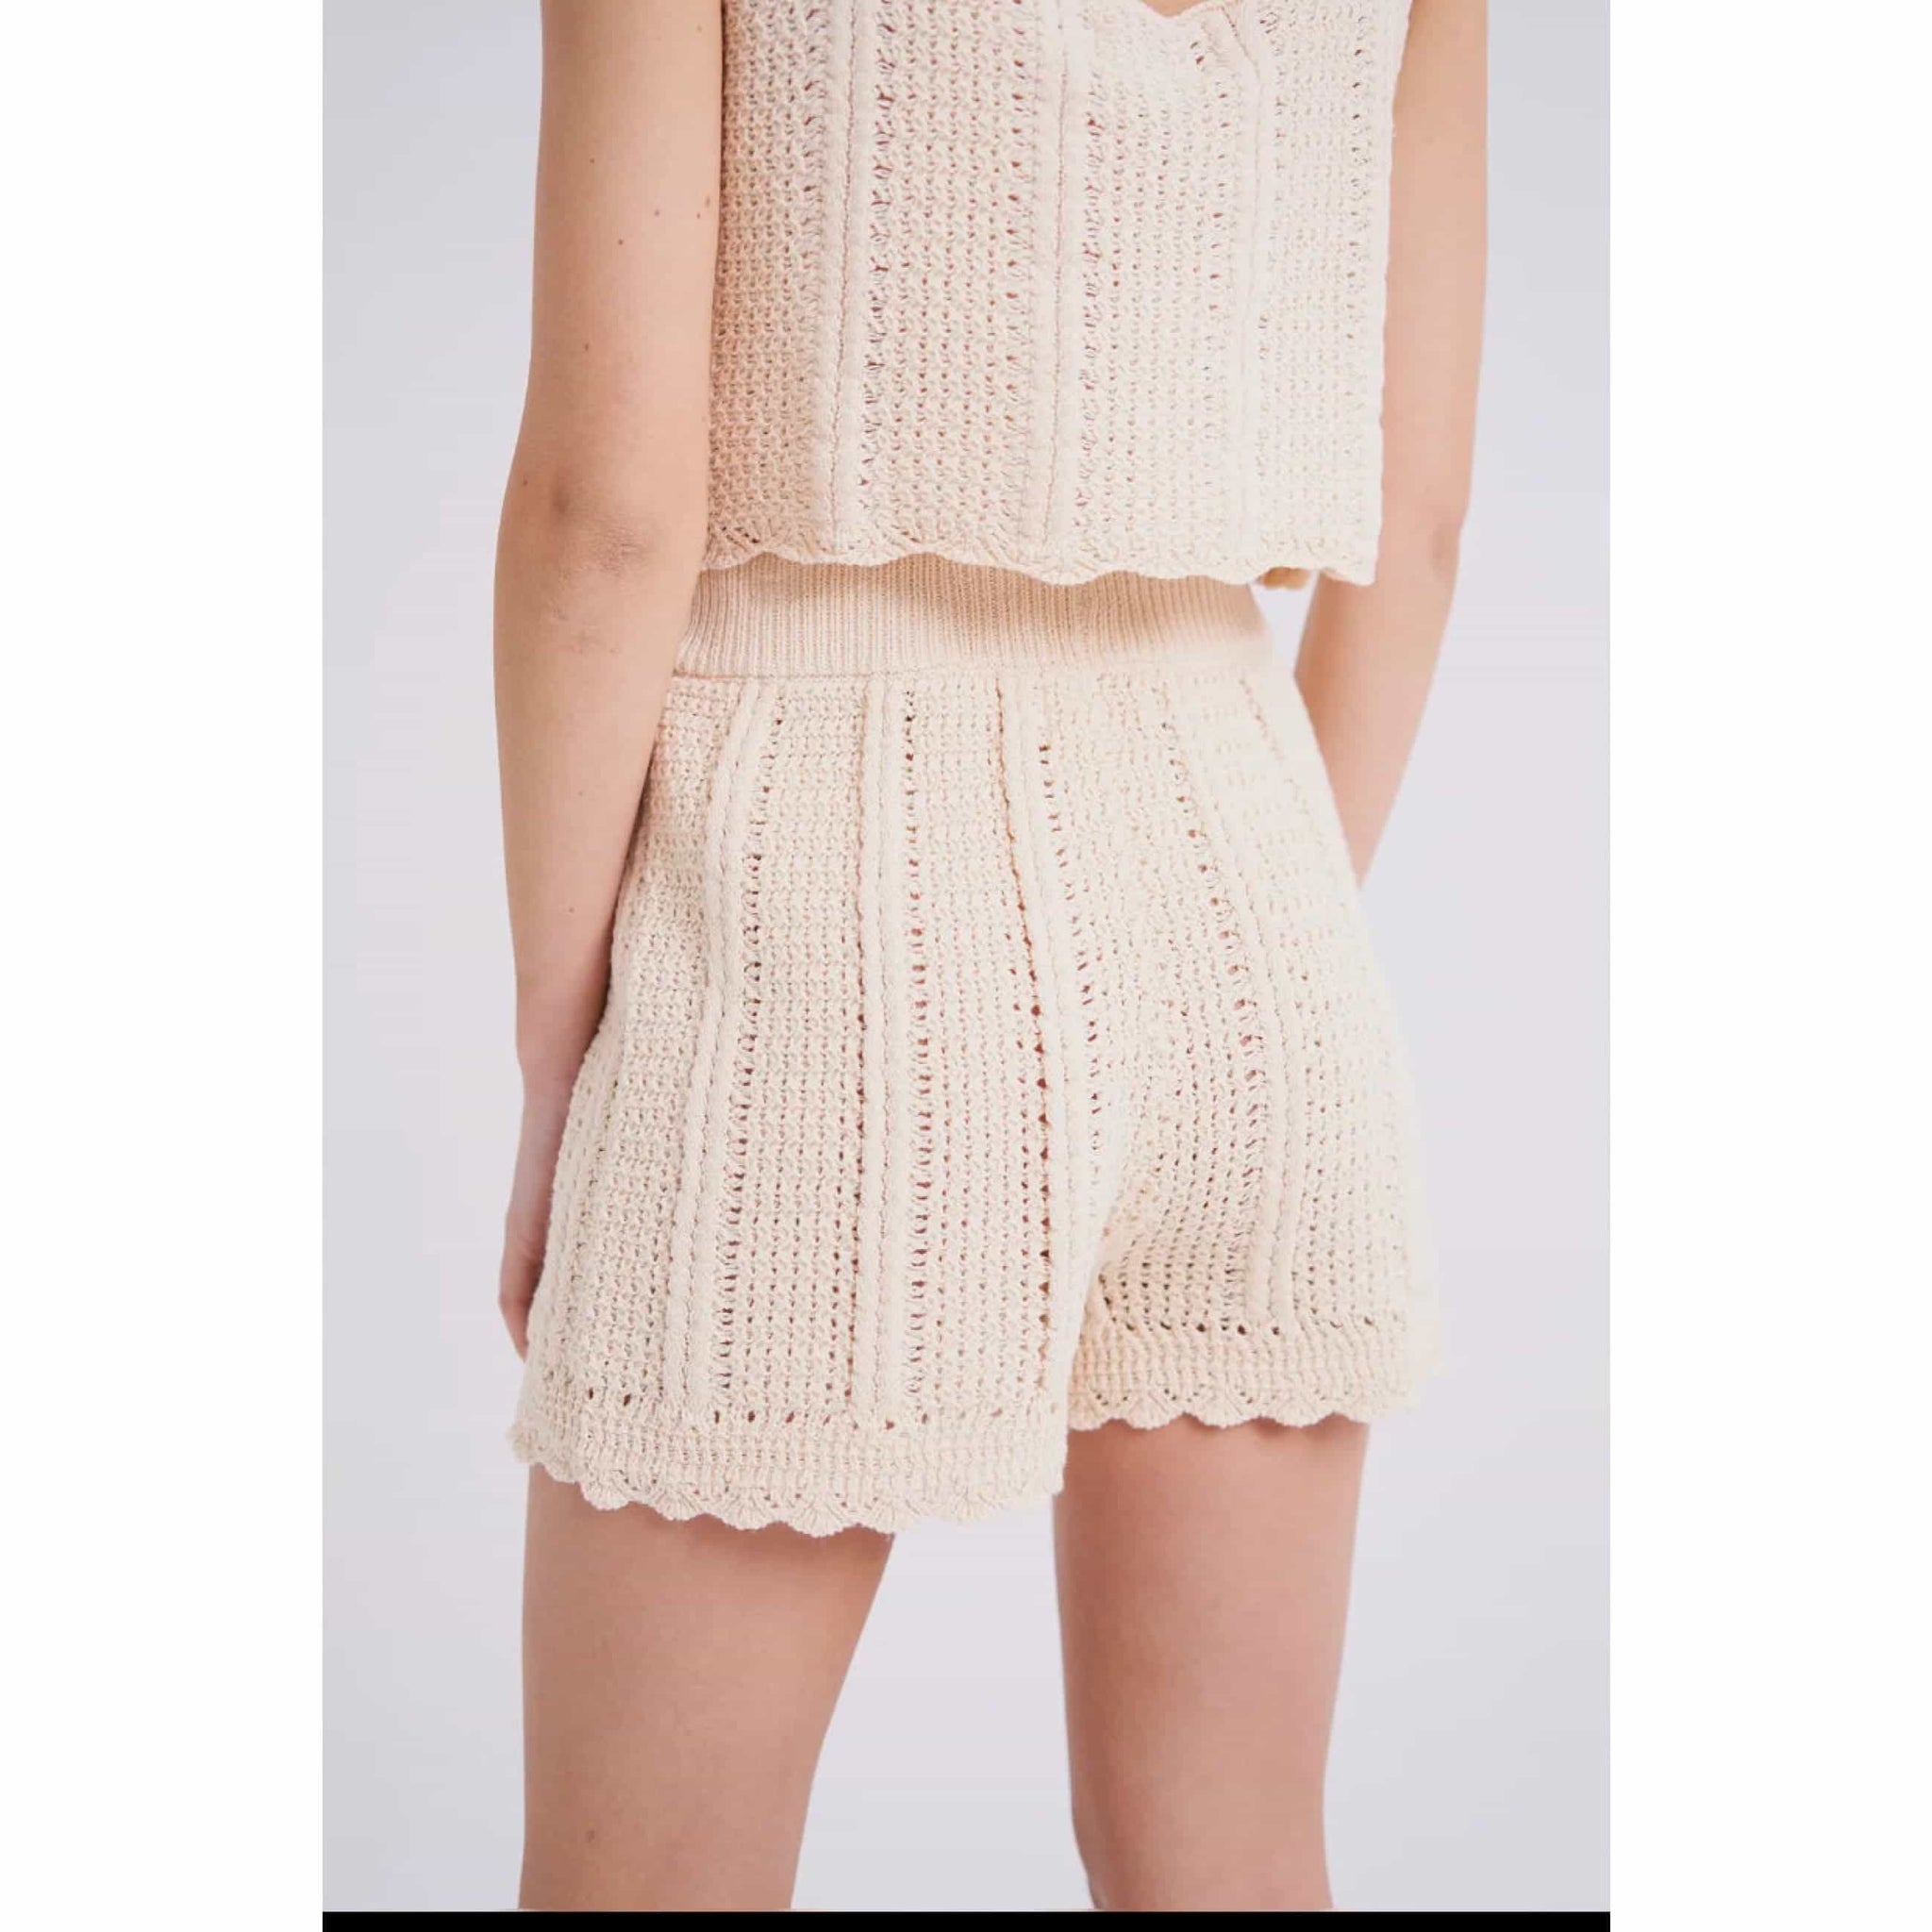 Clever Alice Crochet Shorts in Beige - Bottoms